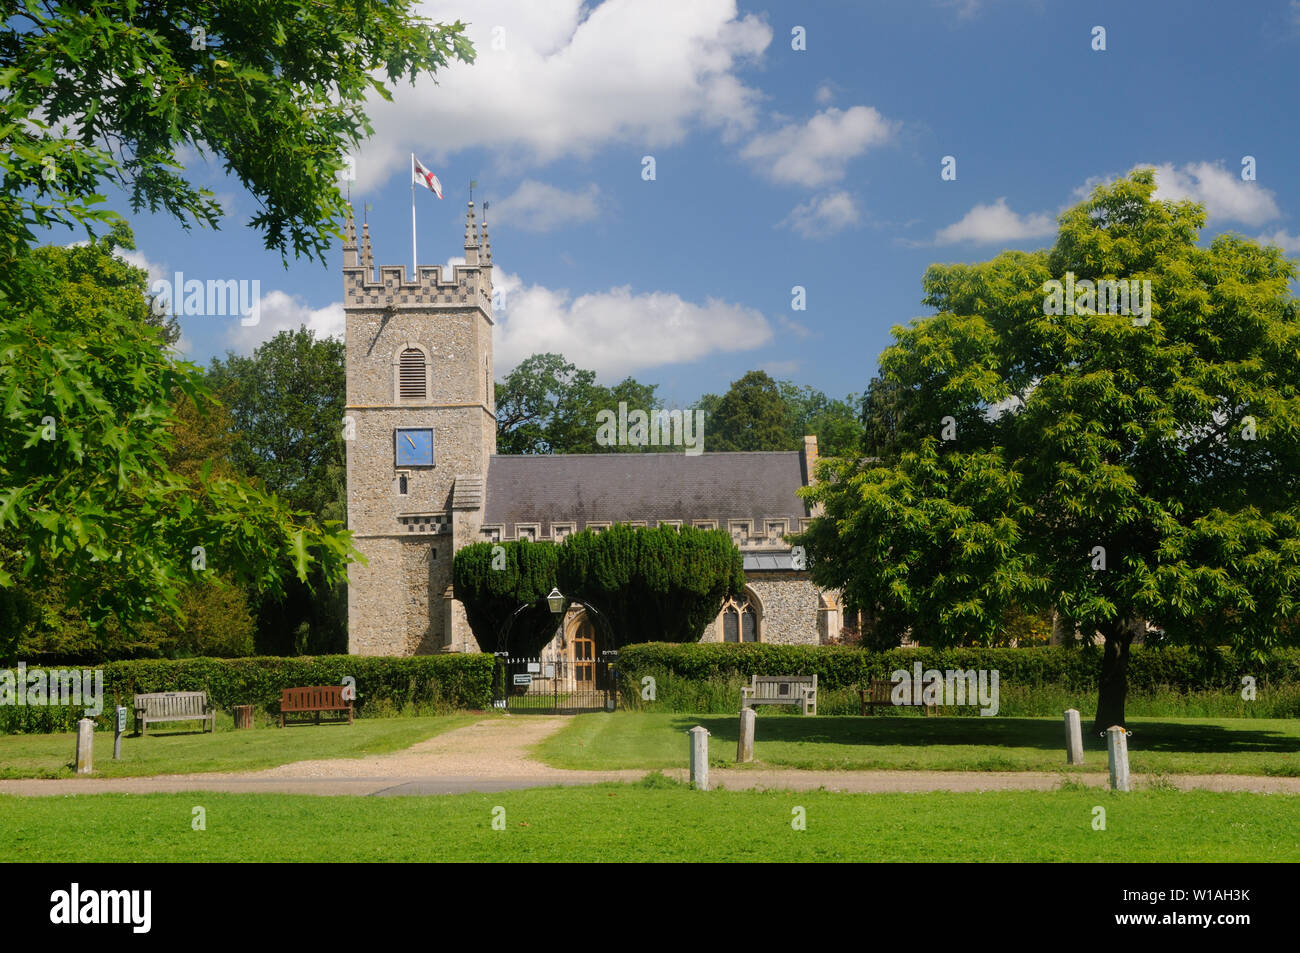 The Church of St. Leonard, in Horringer, Suffolk, England Stock Photo